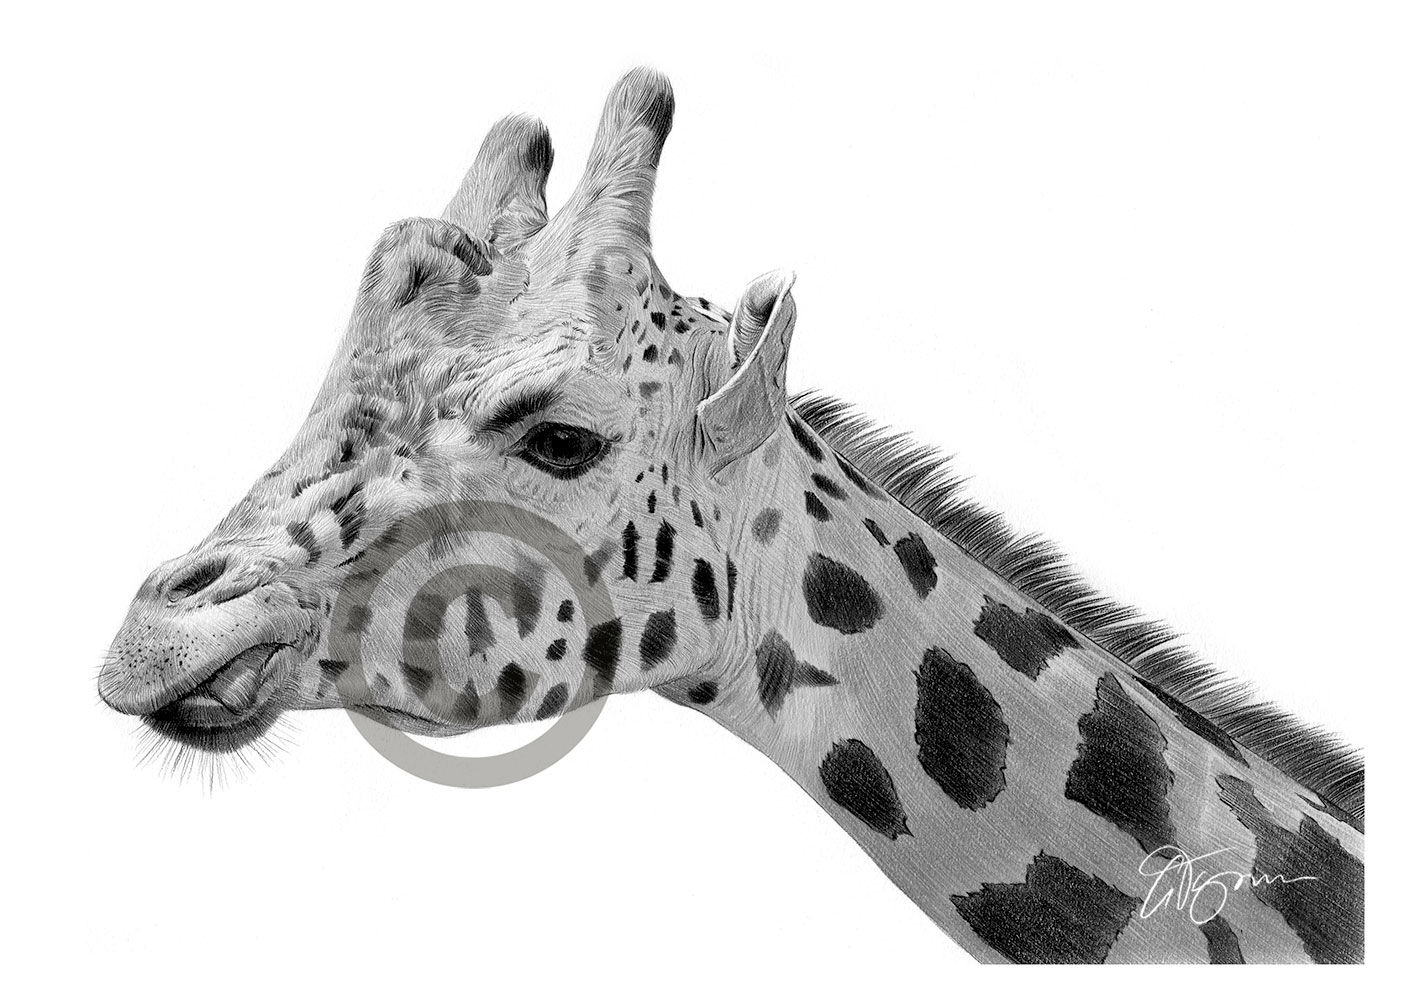 Pencil drawing of a giraffe in landscape by artist Gary Tymon